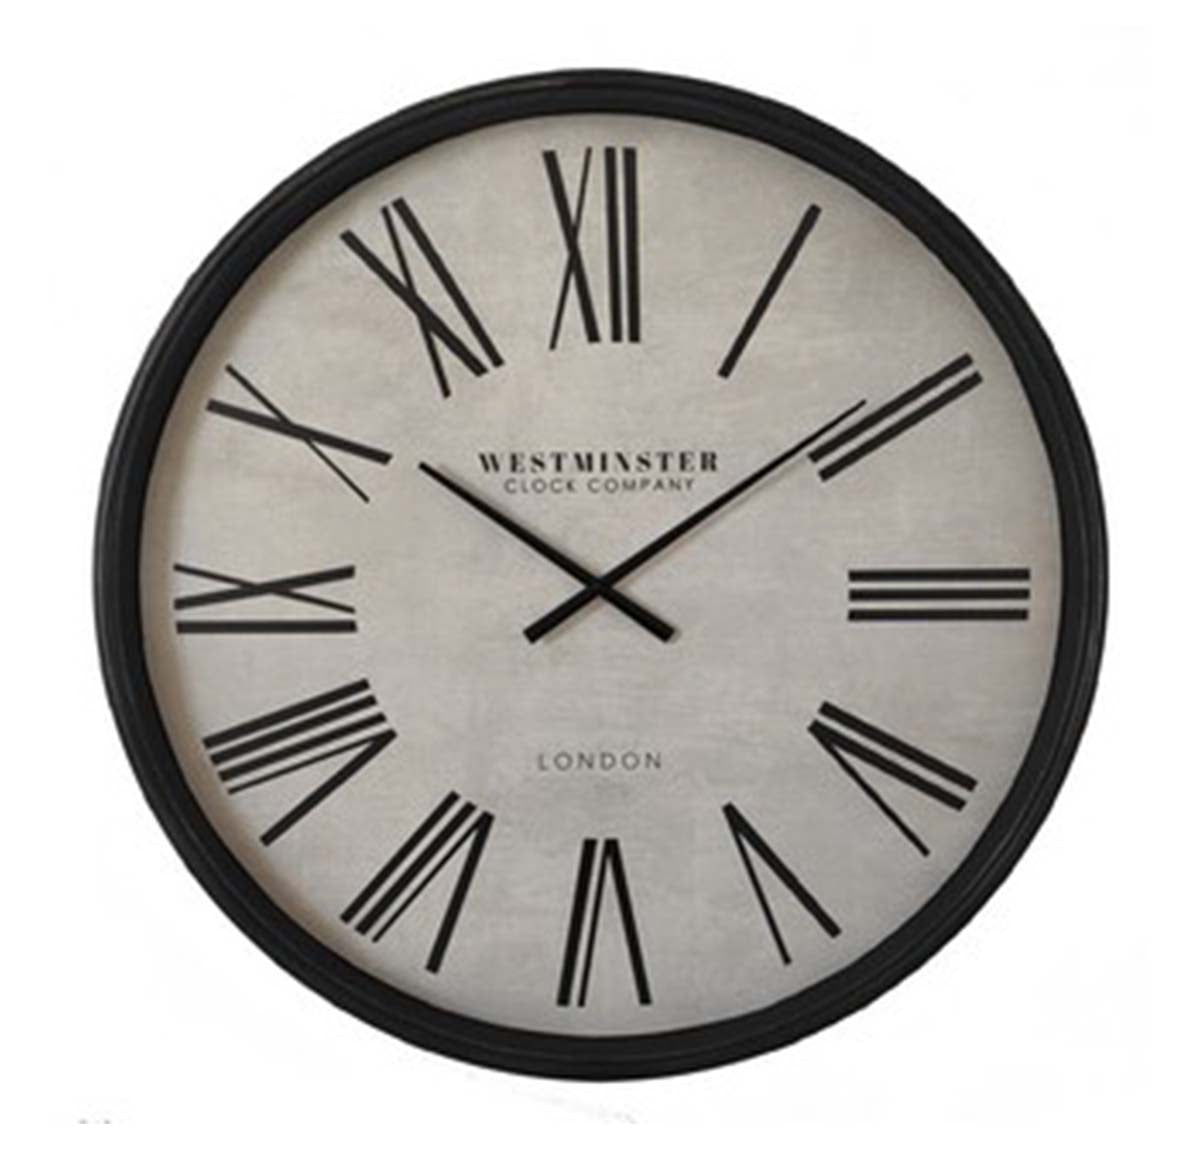 The Westminster Roman Numerals Round Wall Clock - white/dark grey | Home Decor